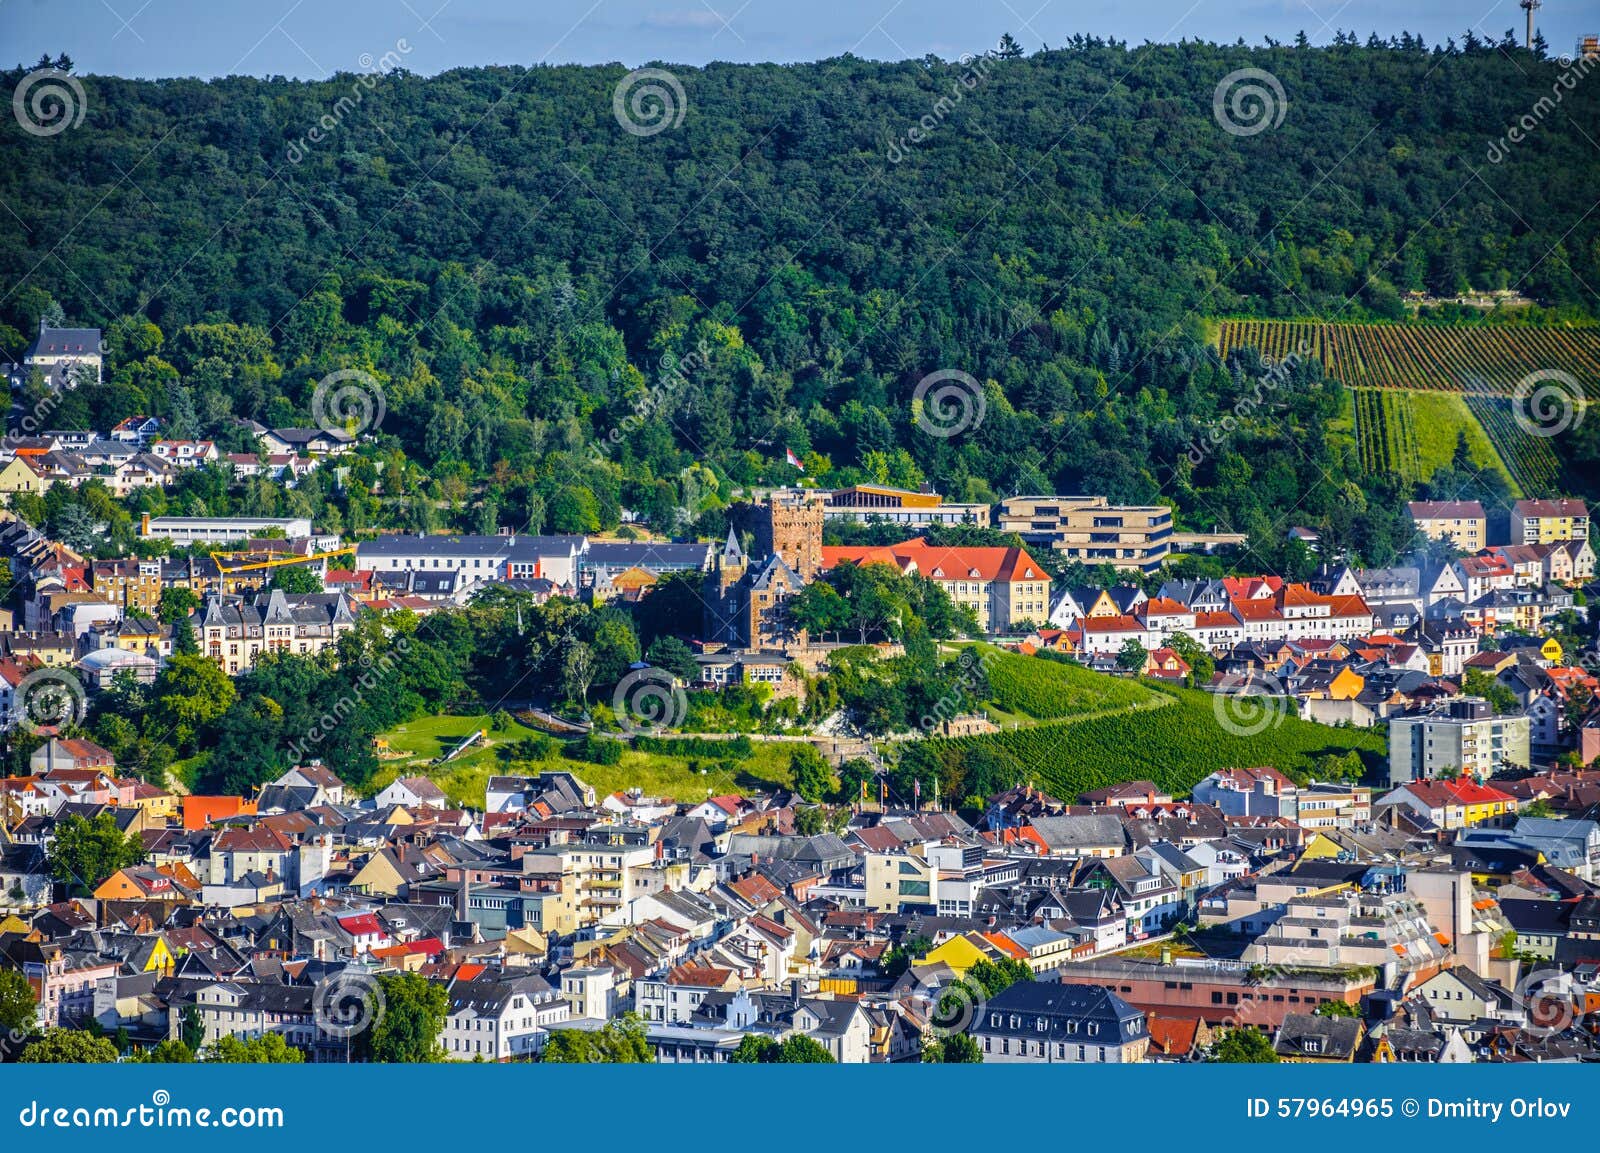 Bingen am Rhein City in Rheinland-Pfalz, Germany Stock Image - Image of ...